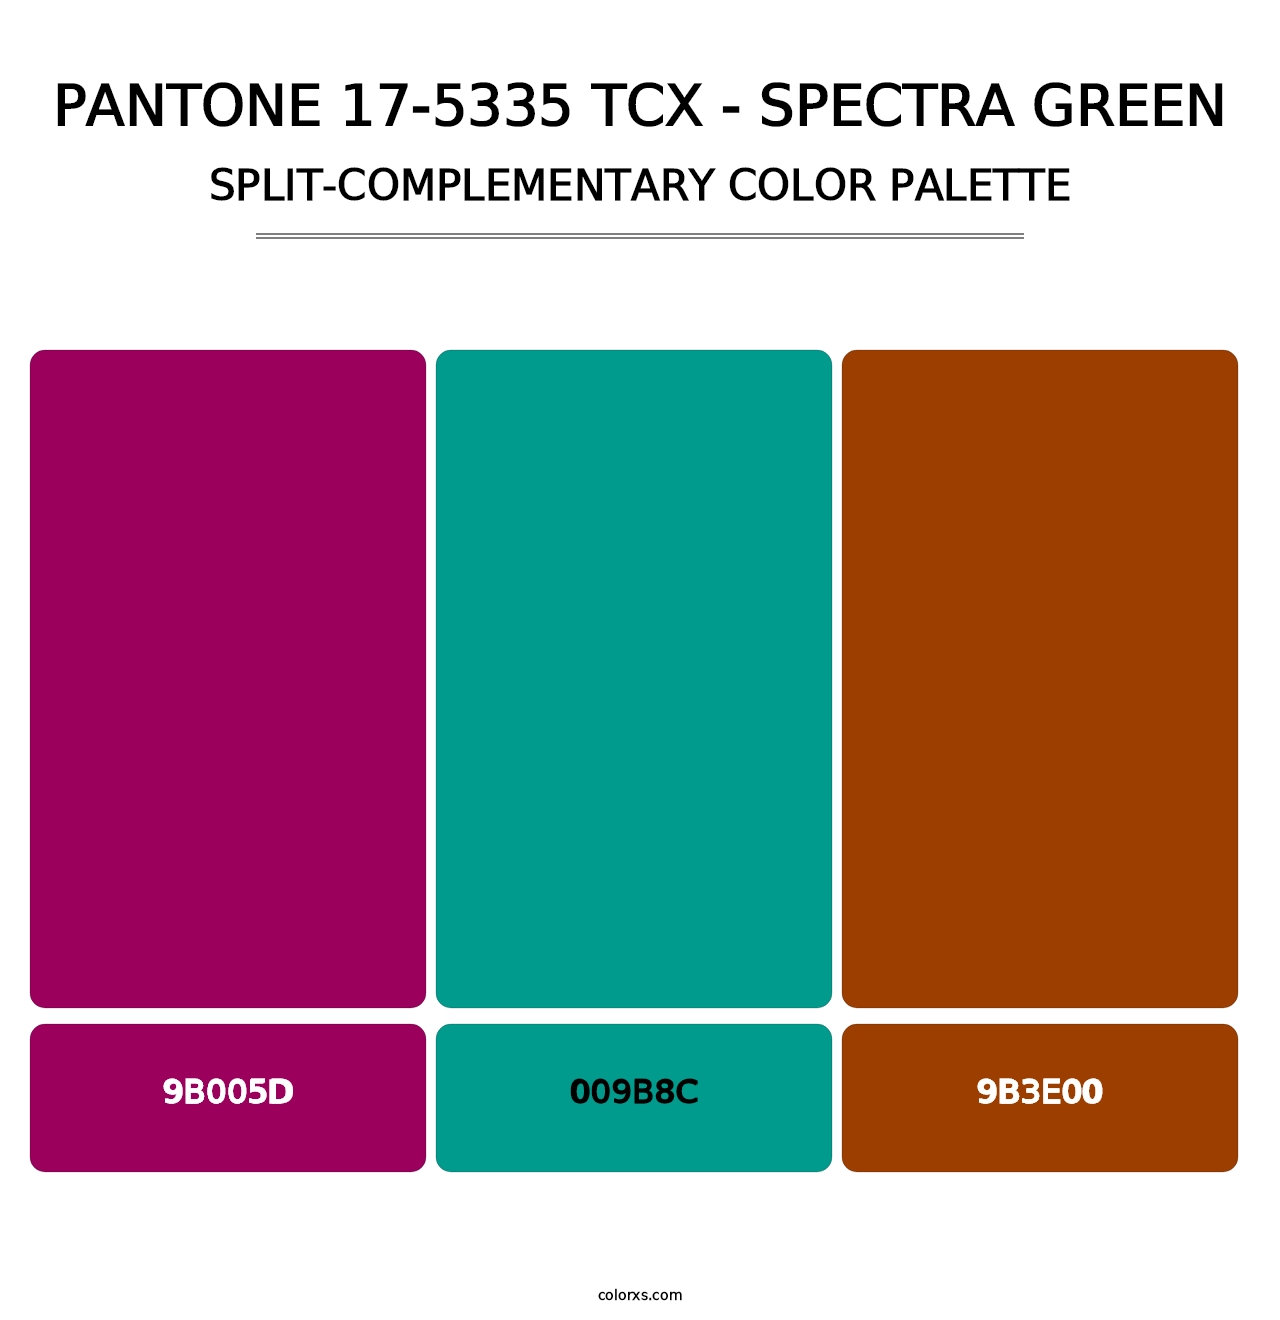 PANTONE 17-5335 TCX - Spectra Green - Split-Complementary Color Palette